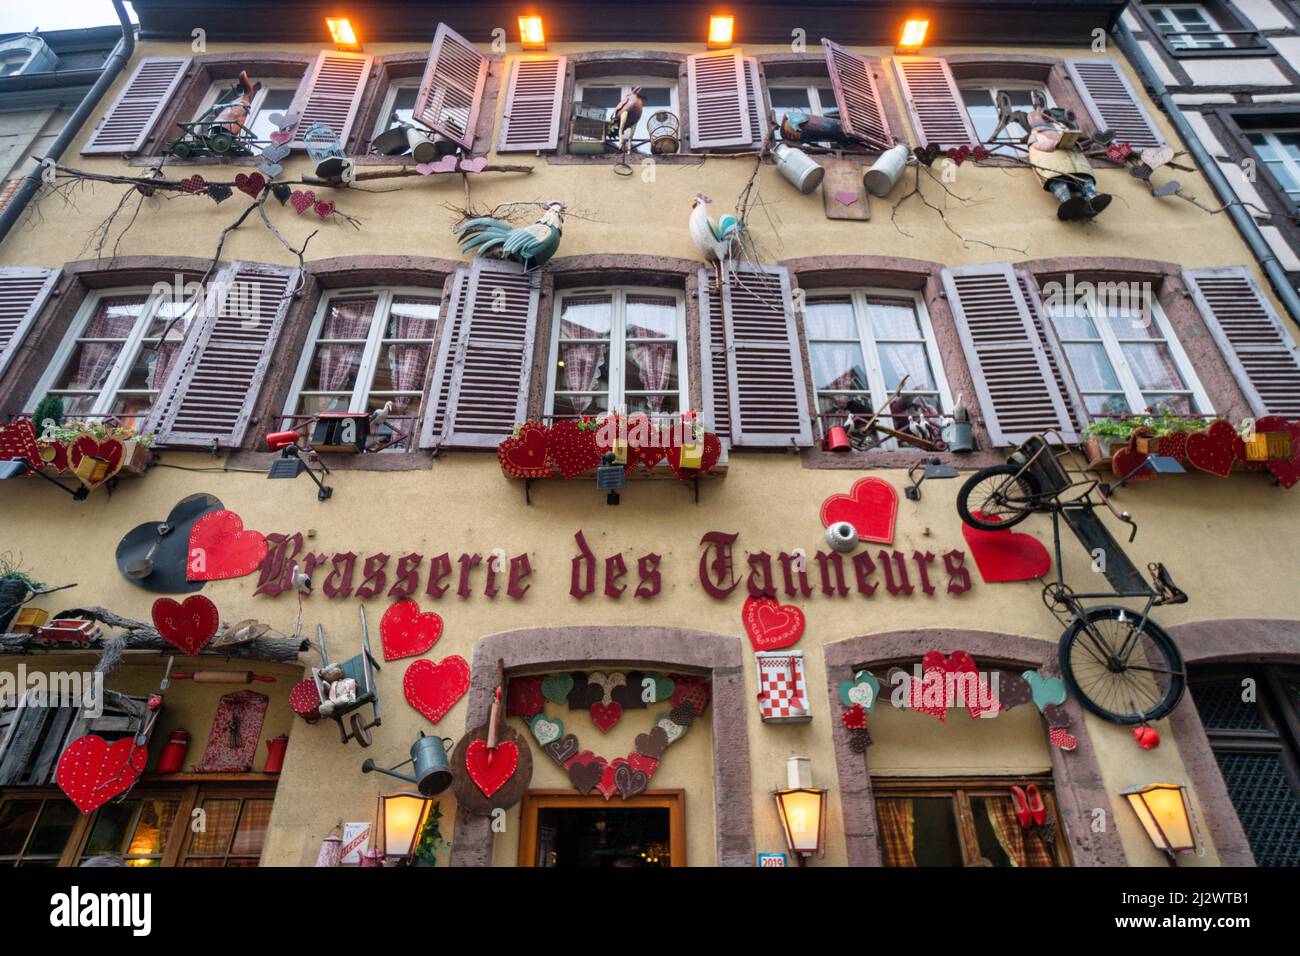 Brasserie des Tanneures, Colmar, Alsace, France, Europe Banque D'Images